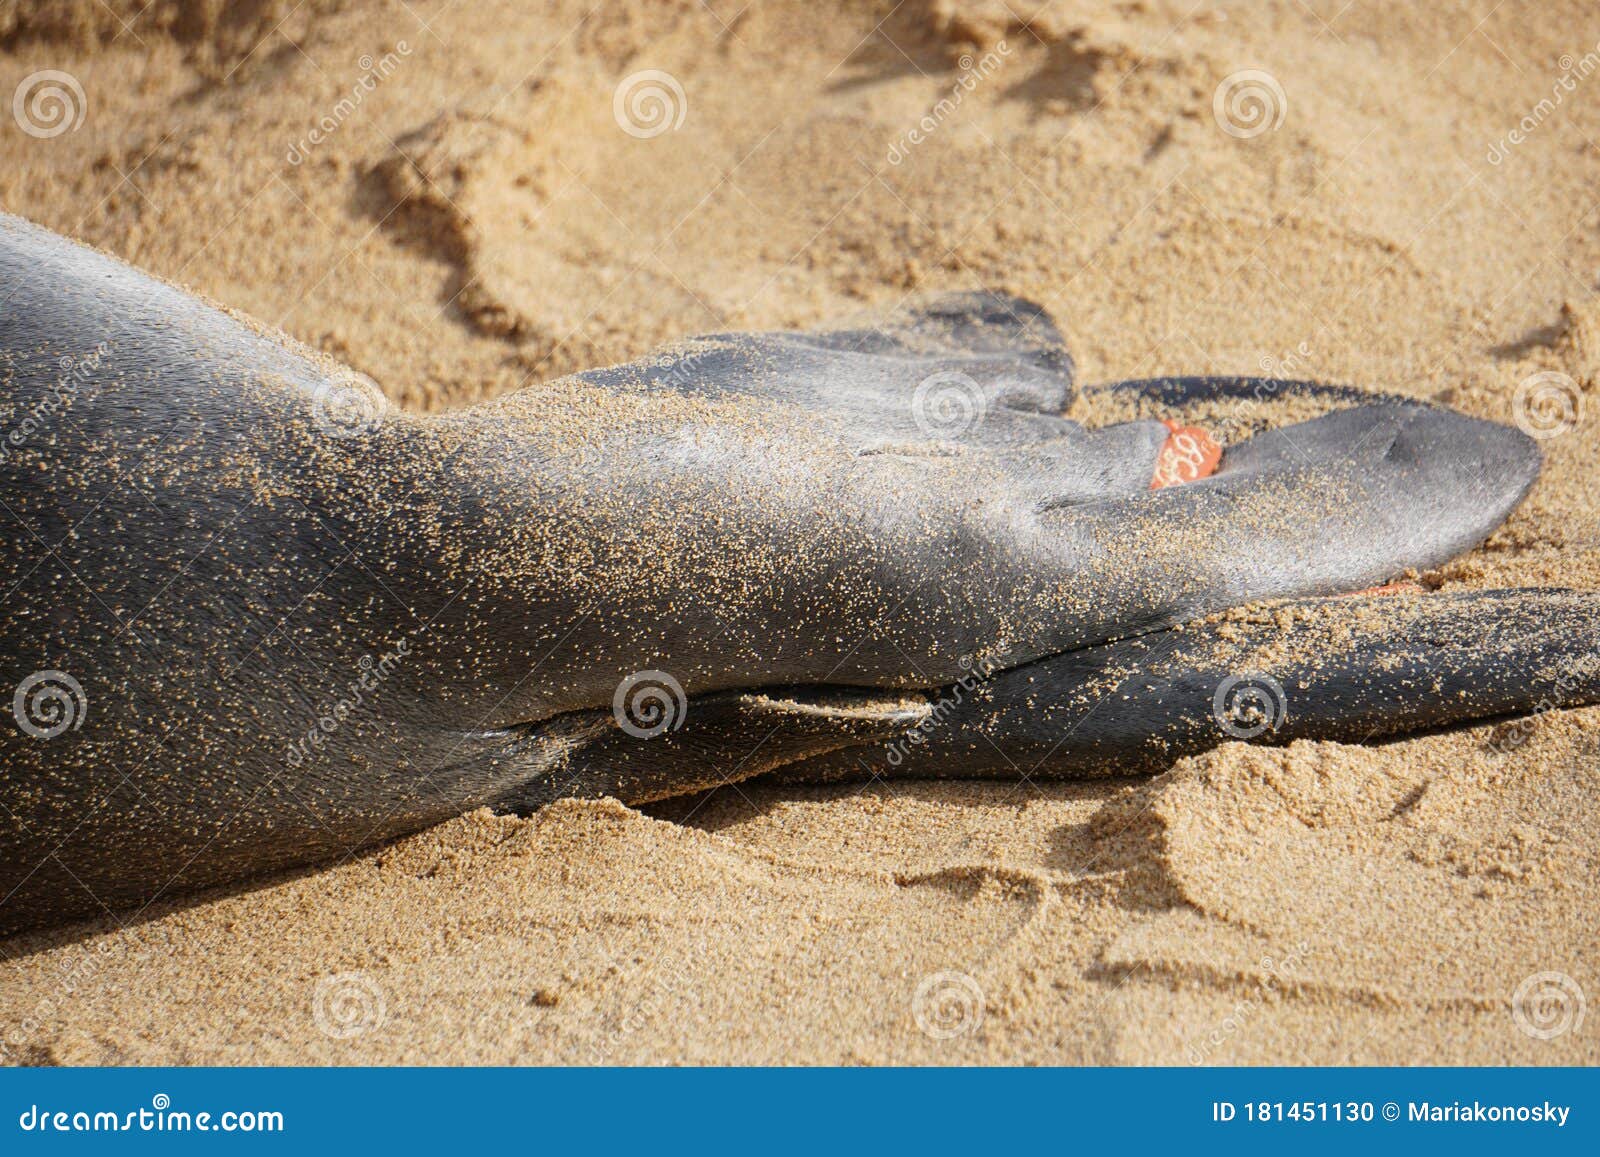 flipper tags on a hawaiian monk seal in kauai